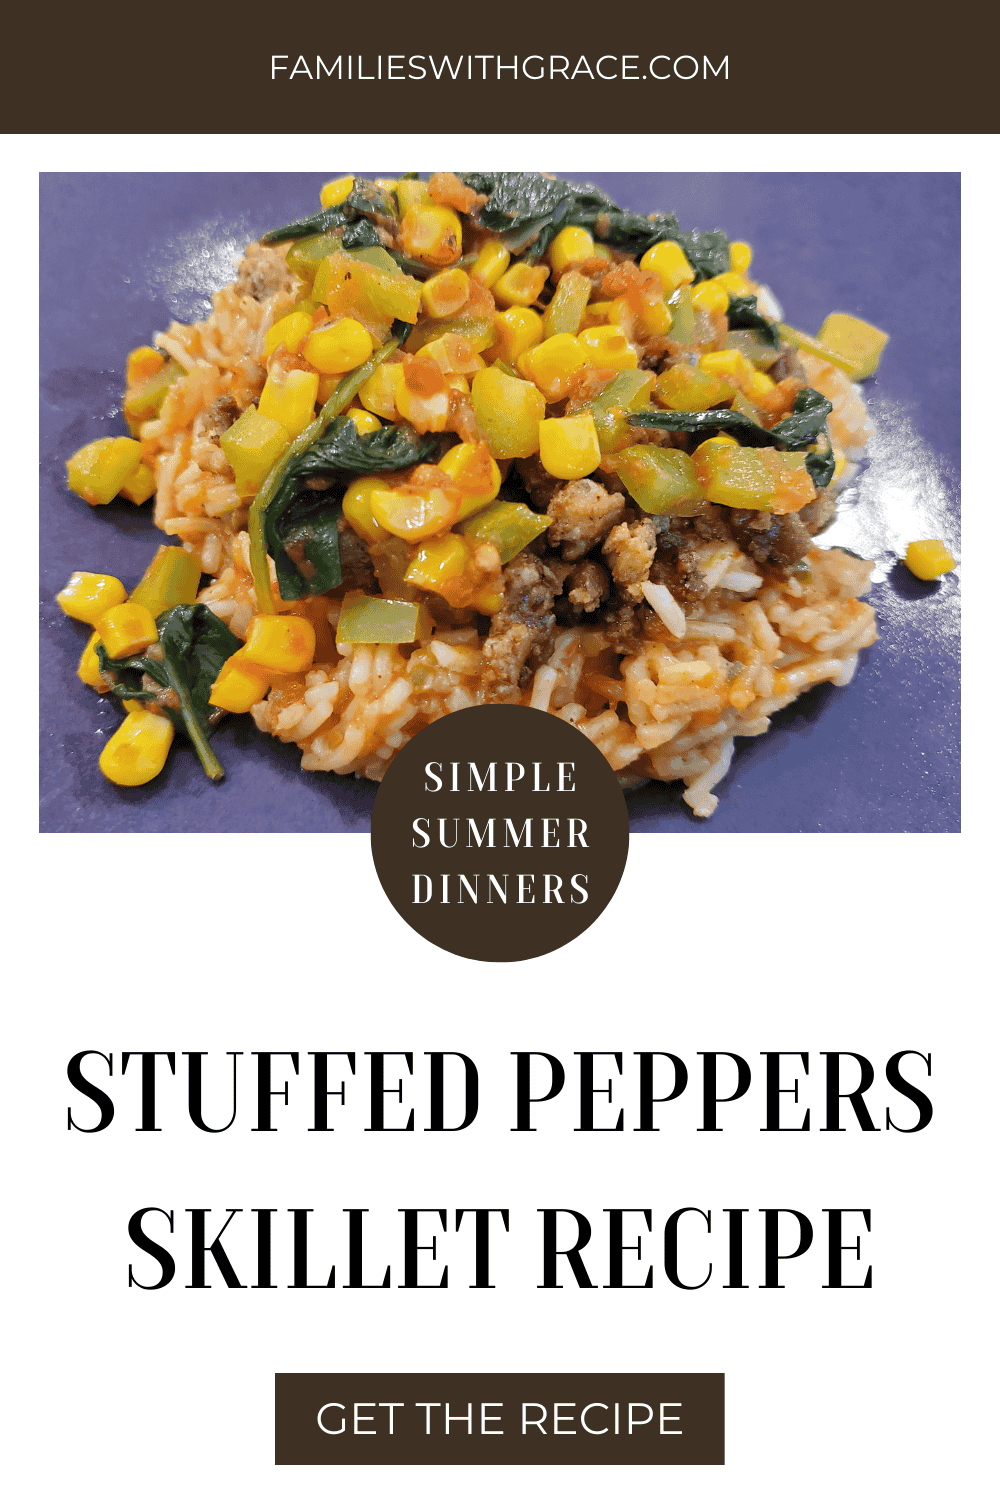 Stuffed peppers skillet recipe